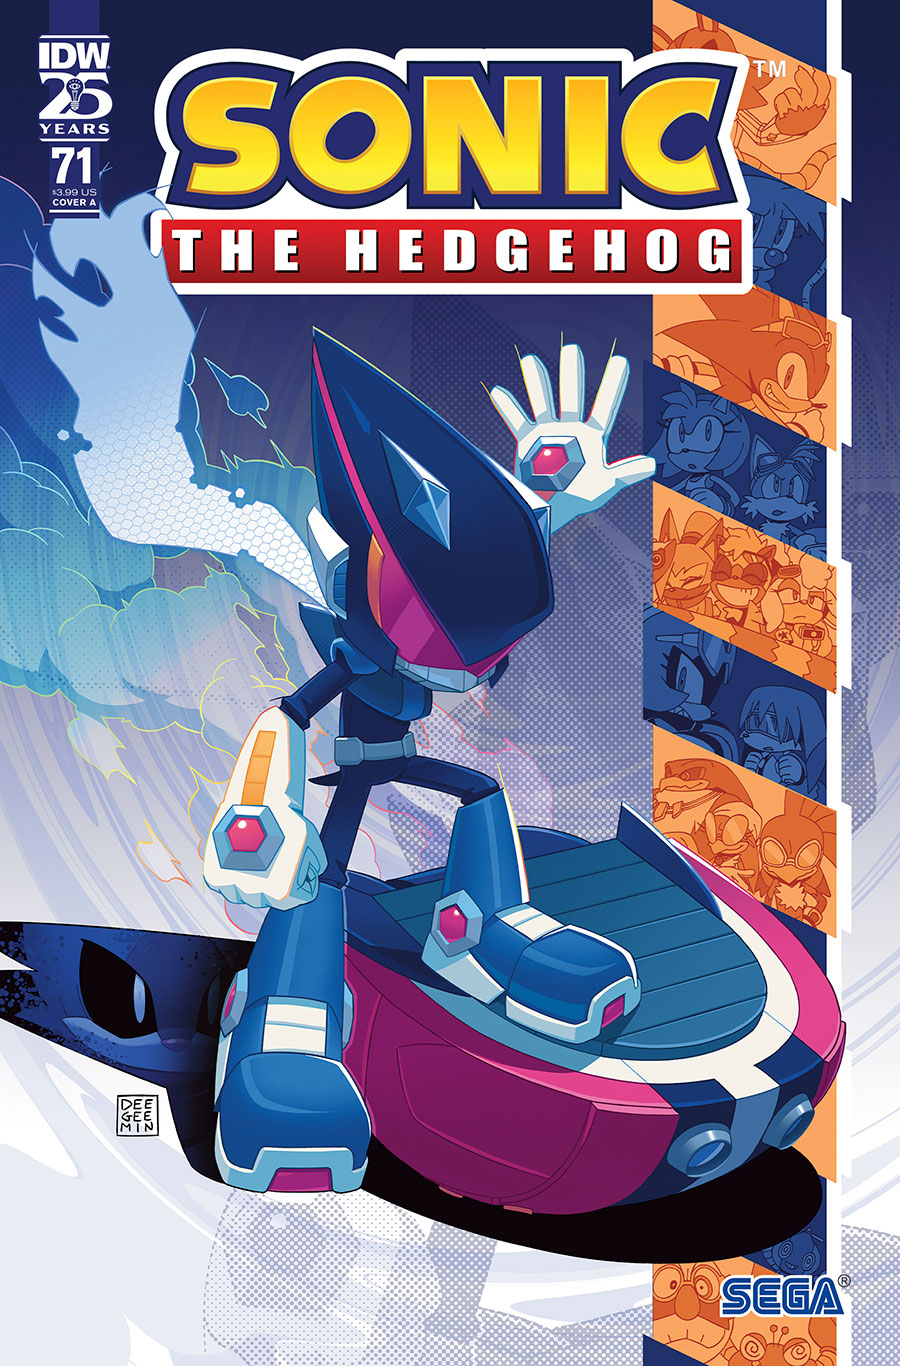 Sonic The Hedgehog Vol 3 #71 Cover A Regular Min Ho Kim Cover